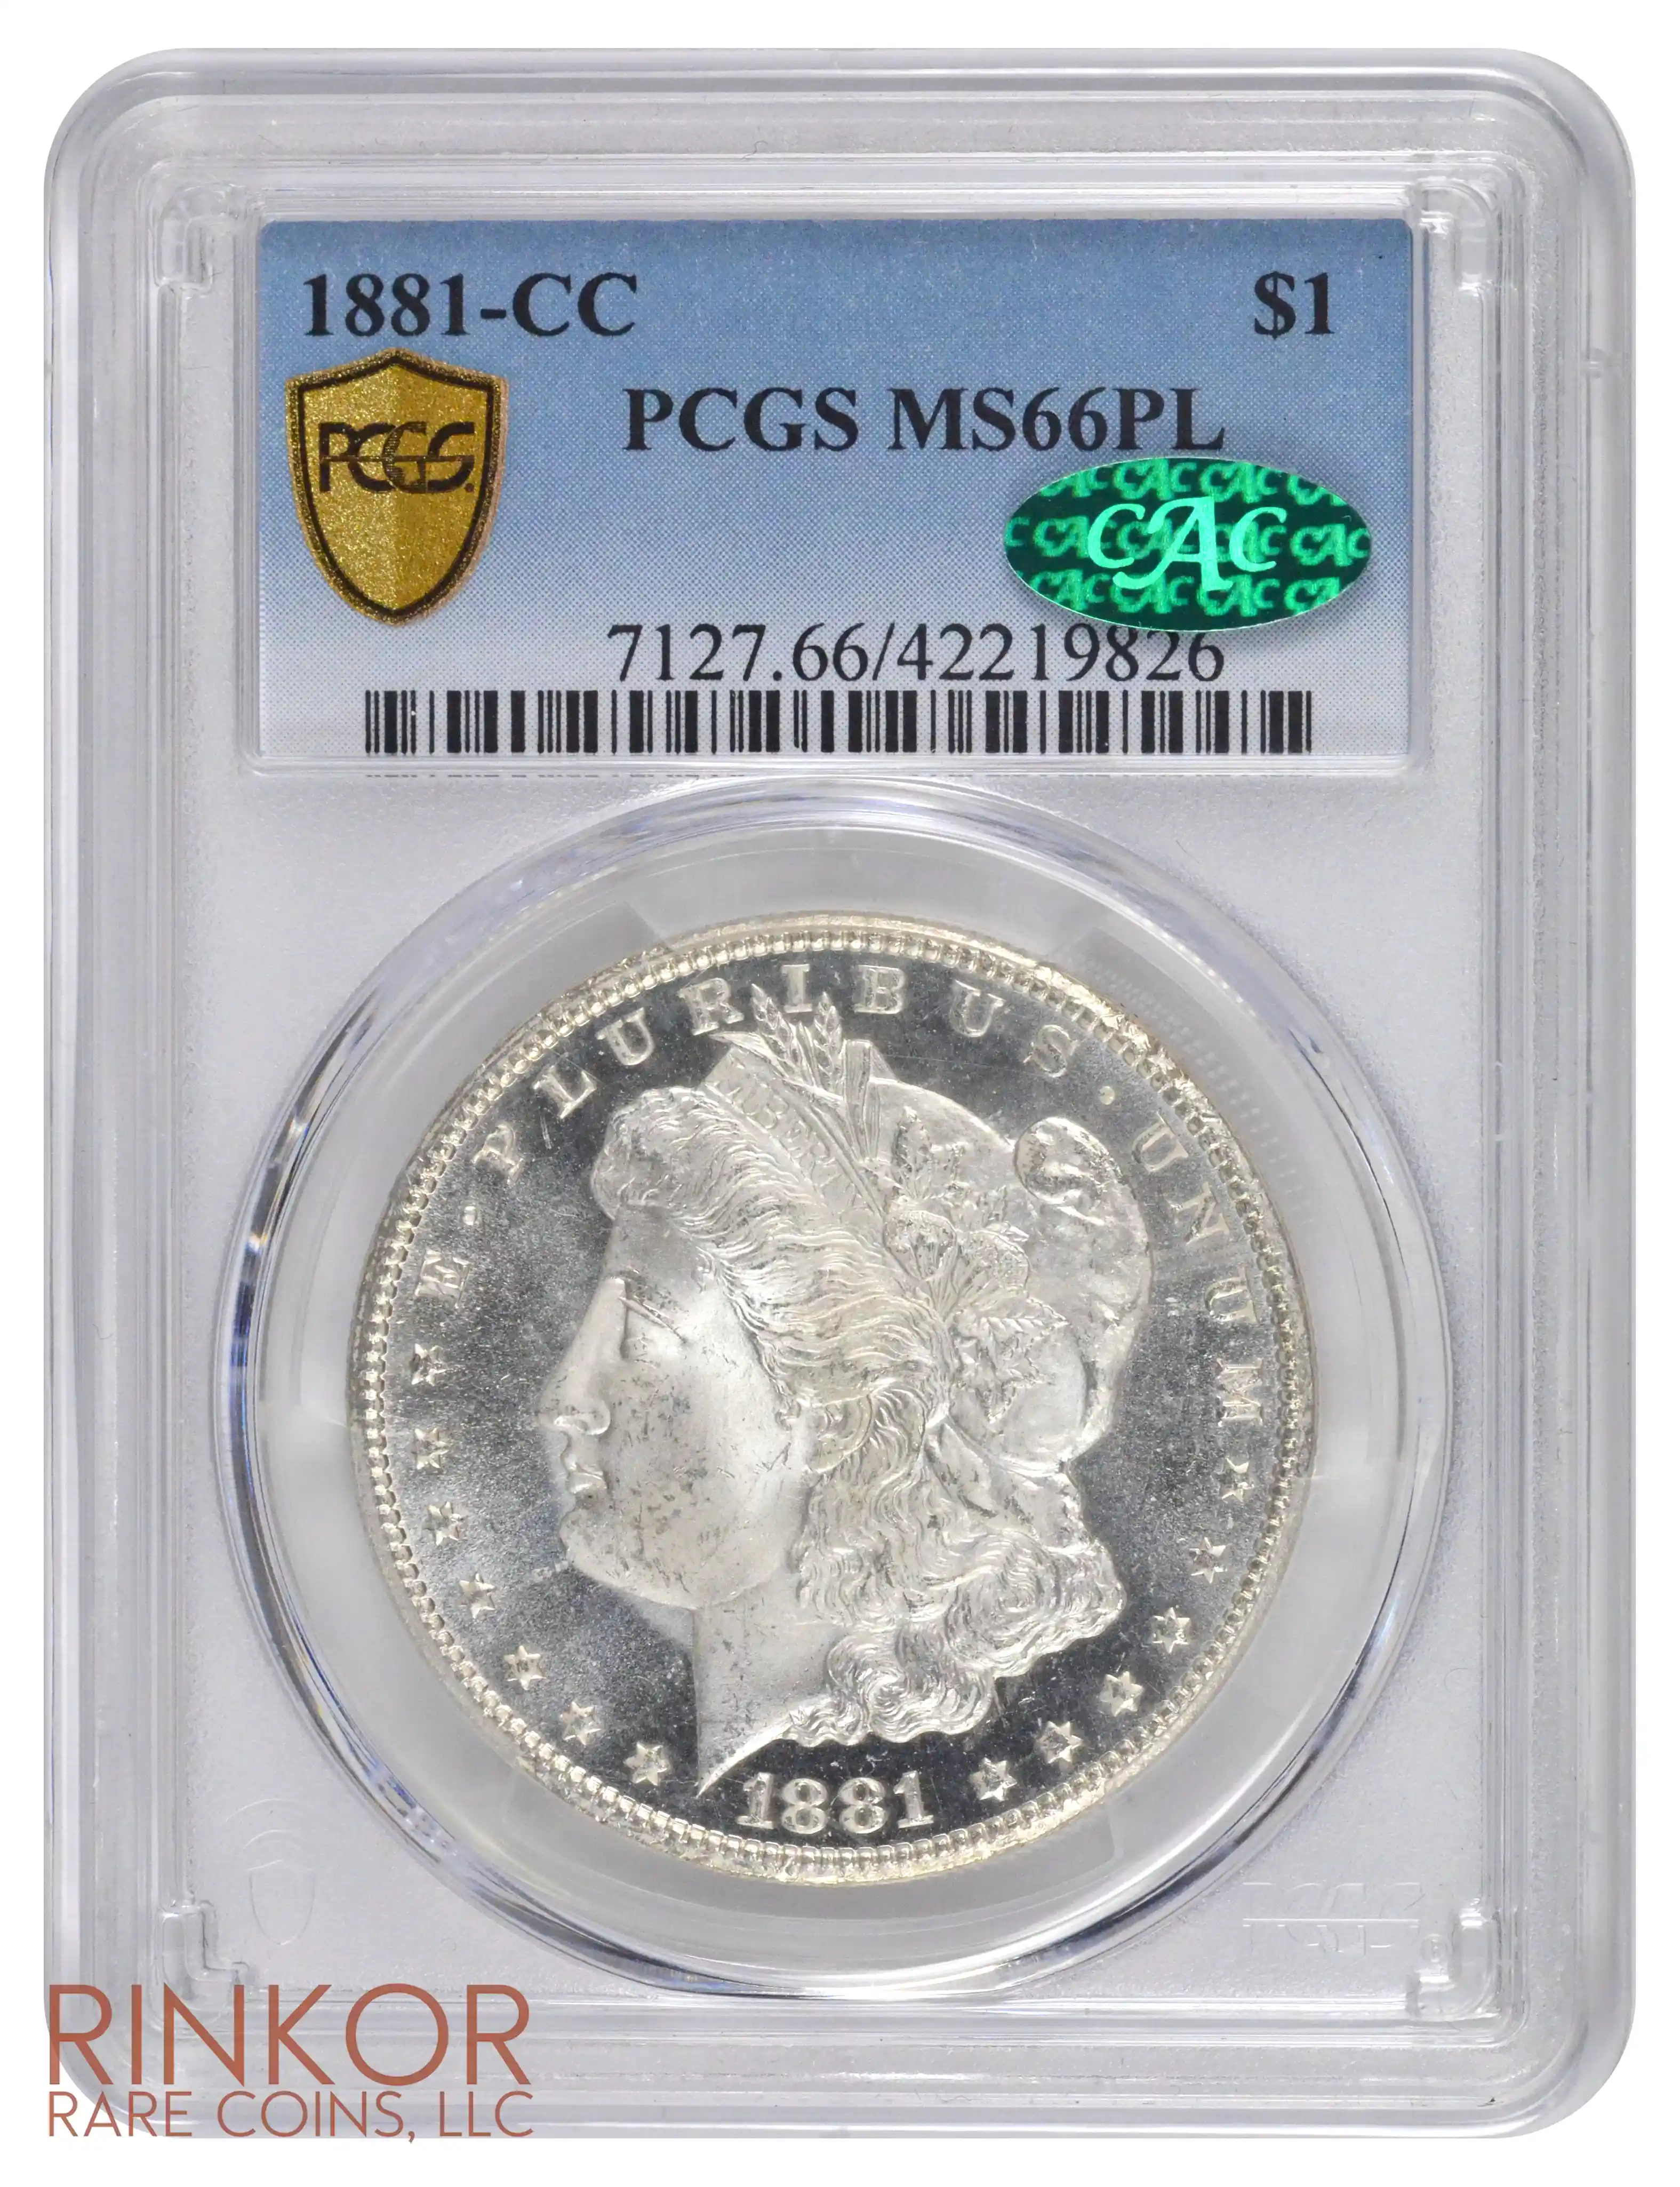 1881-CC $1 PCGS MS 66 PL CAC